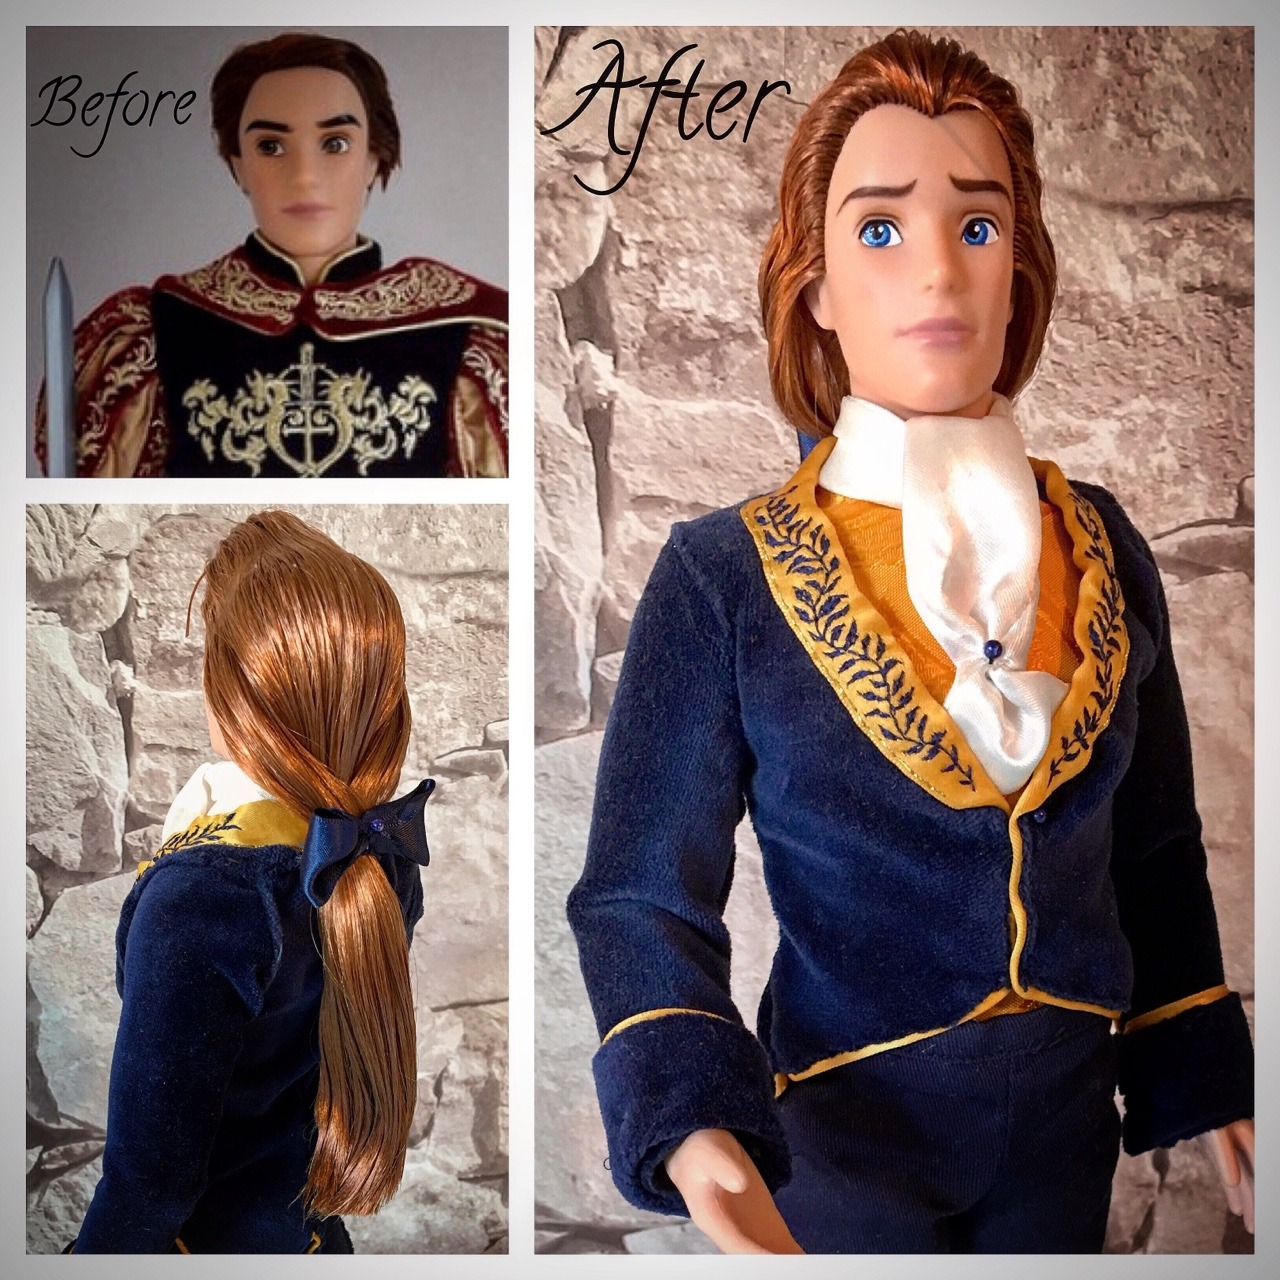 prince adam disney doll